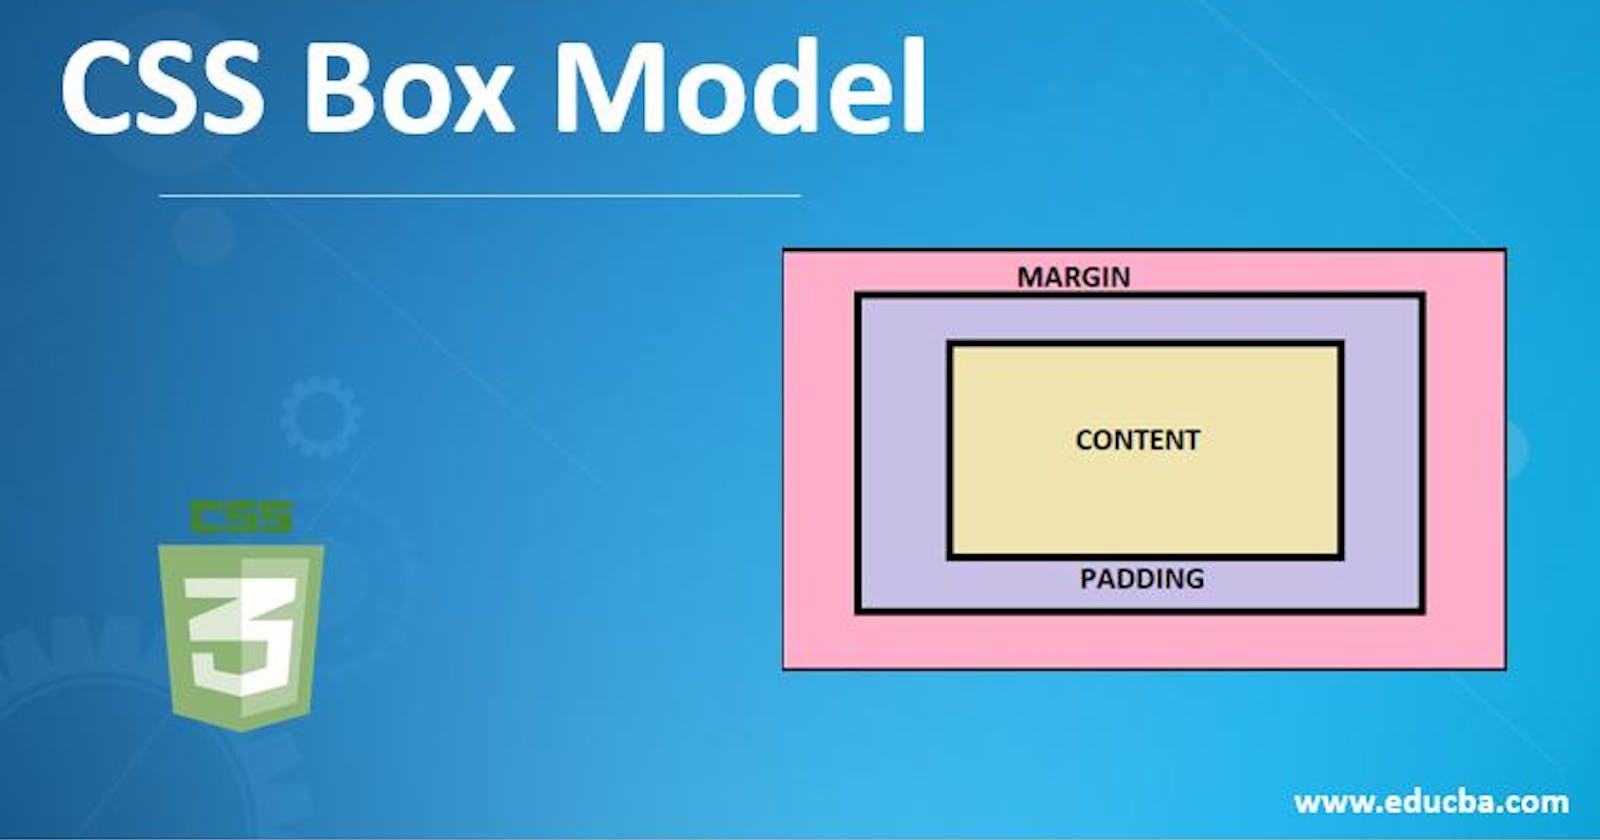 CSS Box Model: